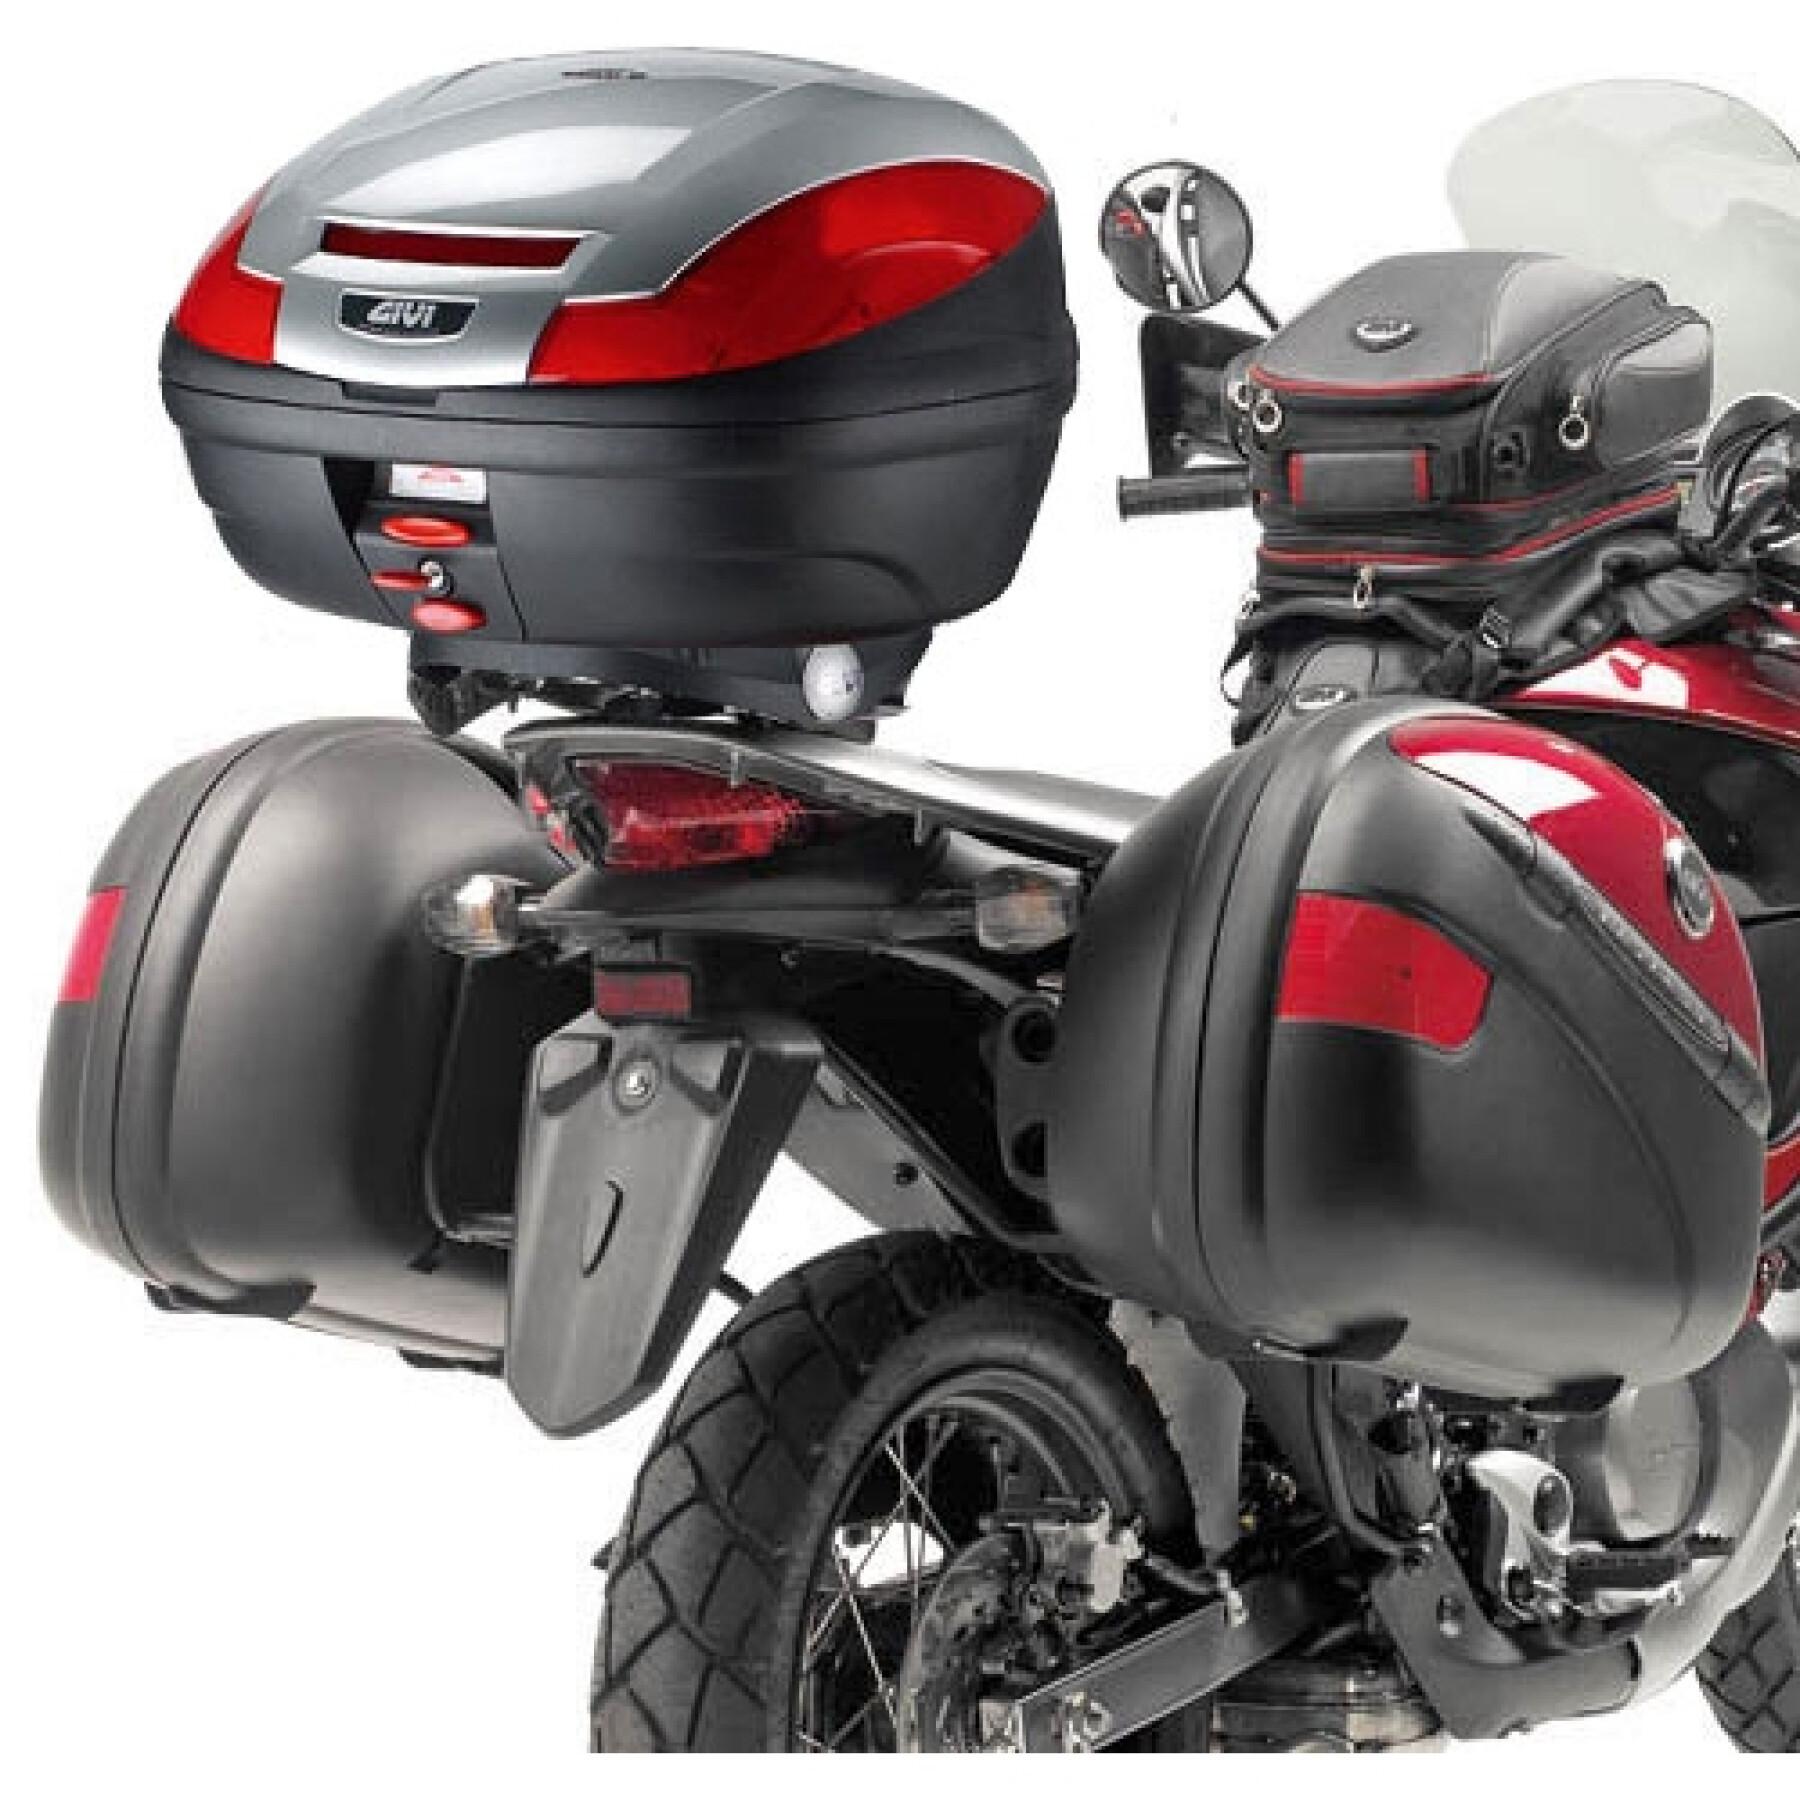 Supporto bauletto della moto Givi Monokey Honda XL 700 V Transalp (08 à 13)